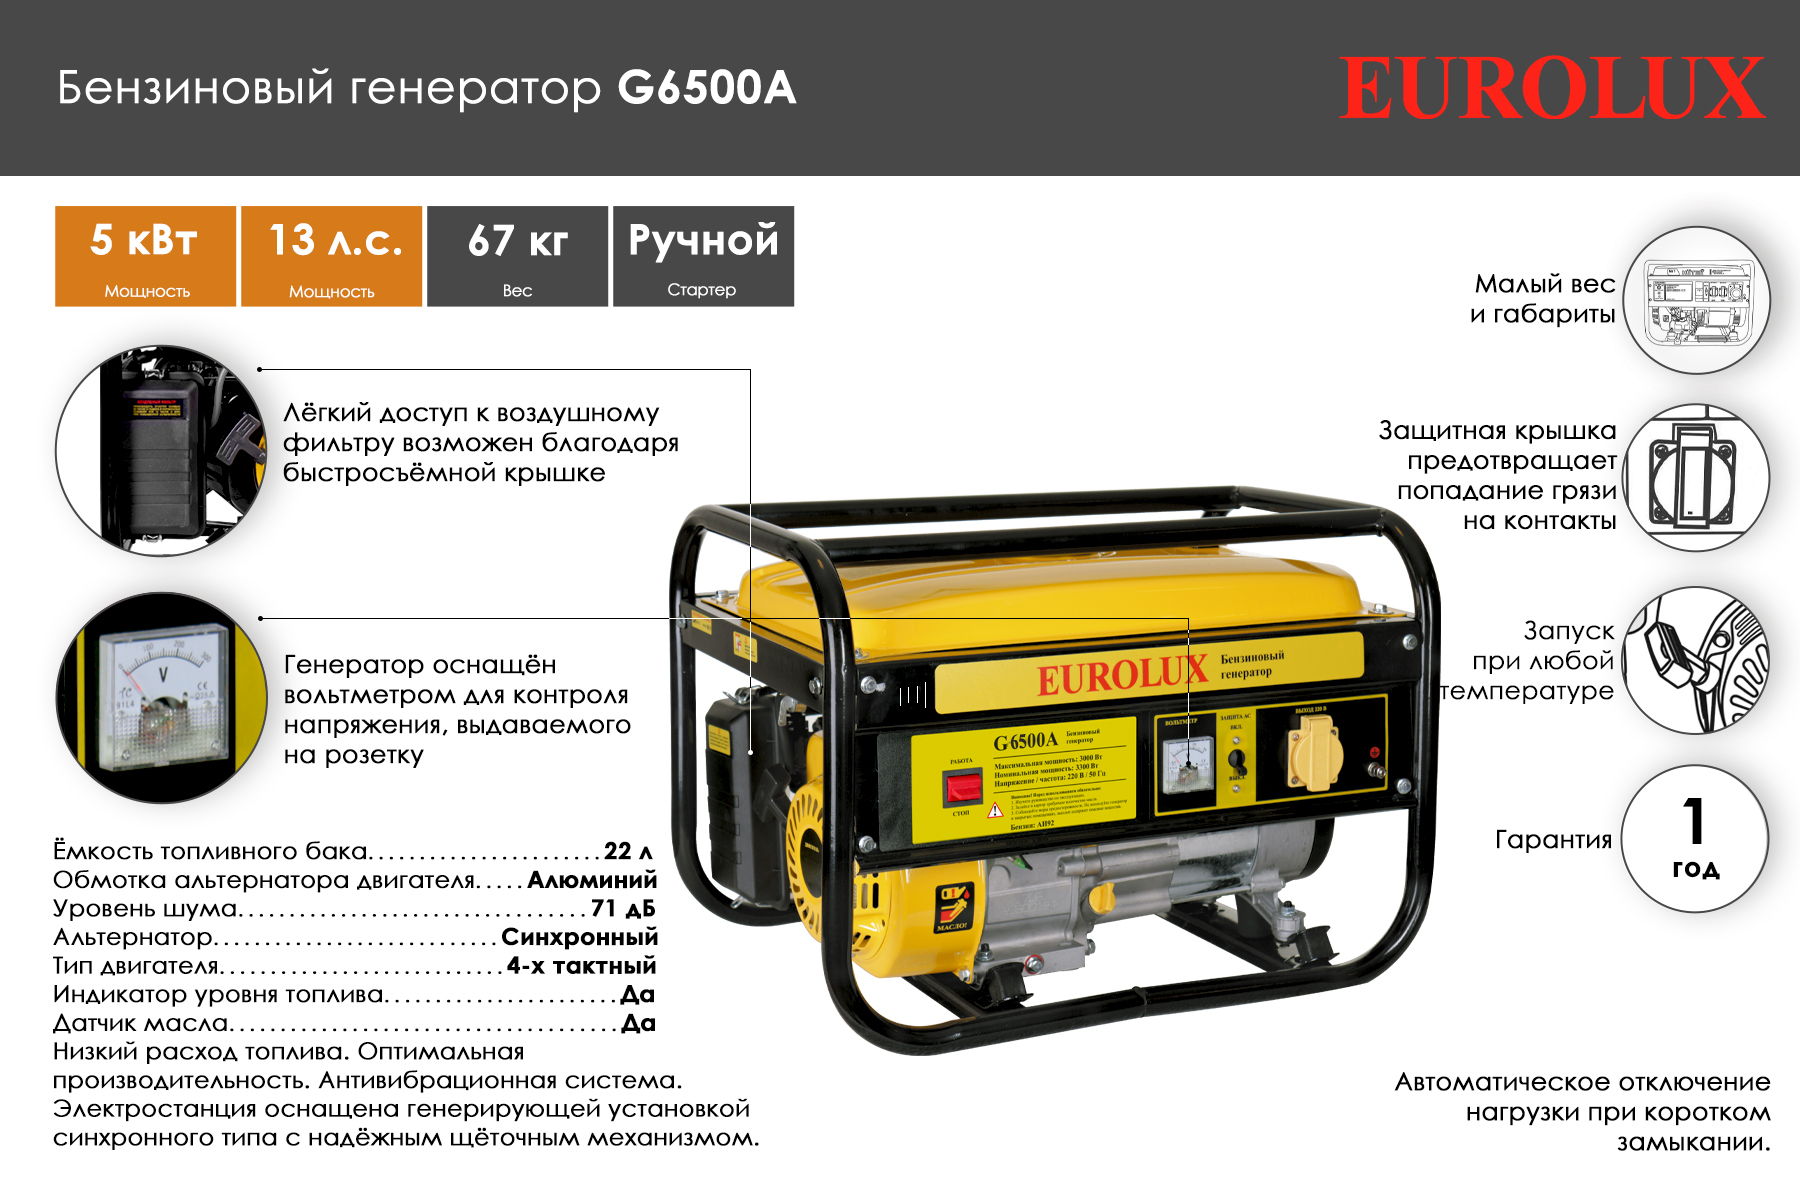 Eurolux g4000a. Электрогенератор g6500a Eurolux. Генератор Eurolux g4000a. Бензиновый Генератор Eurolux g2700a. Электрогенератор Eurolux g3600a 64/1/37.